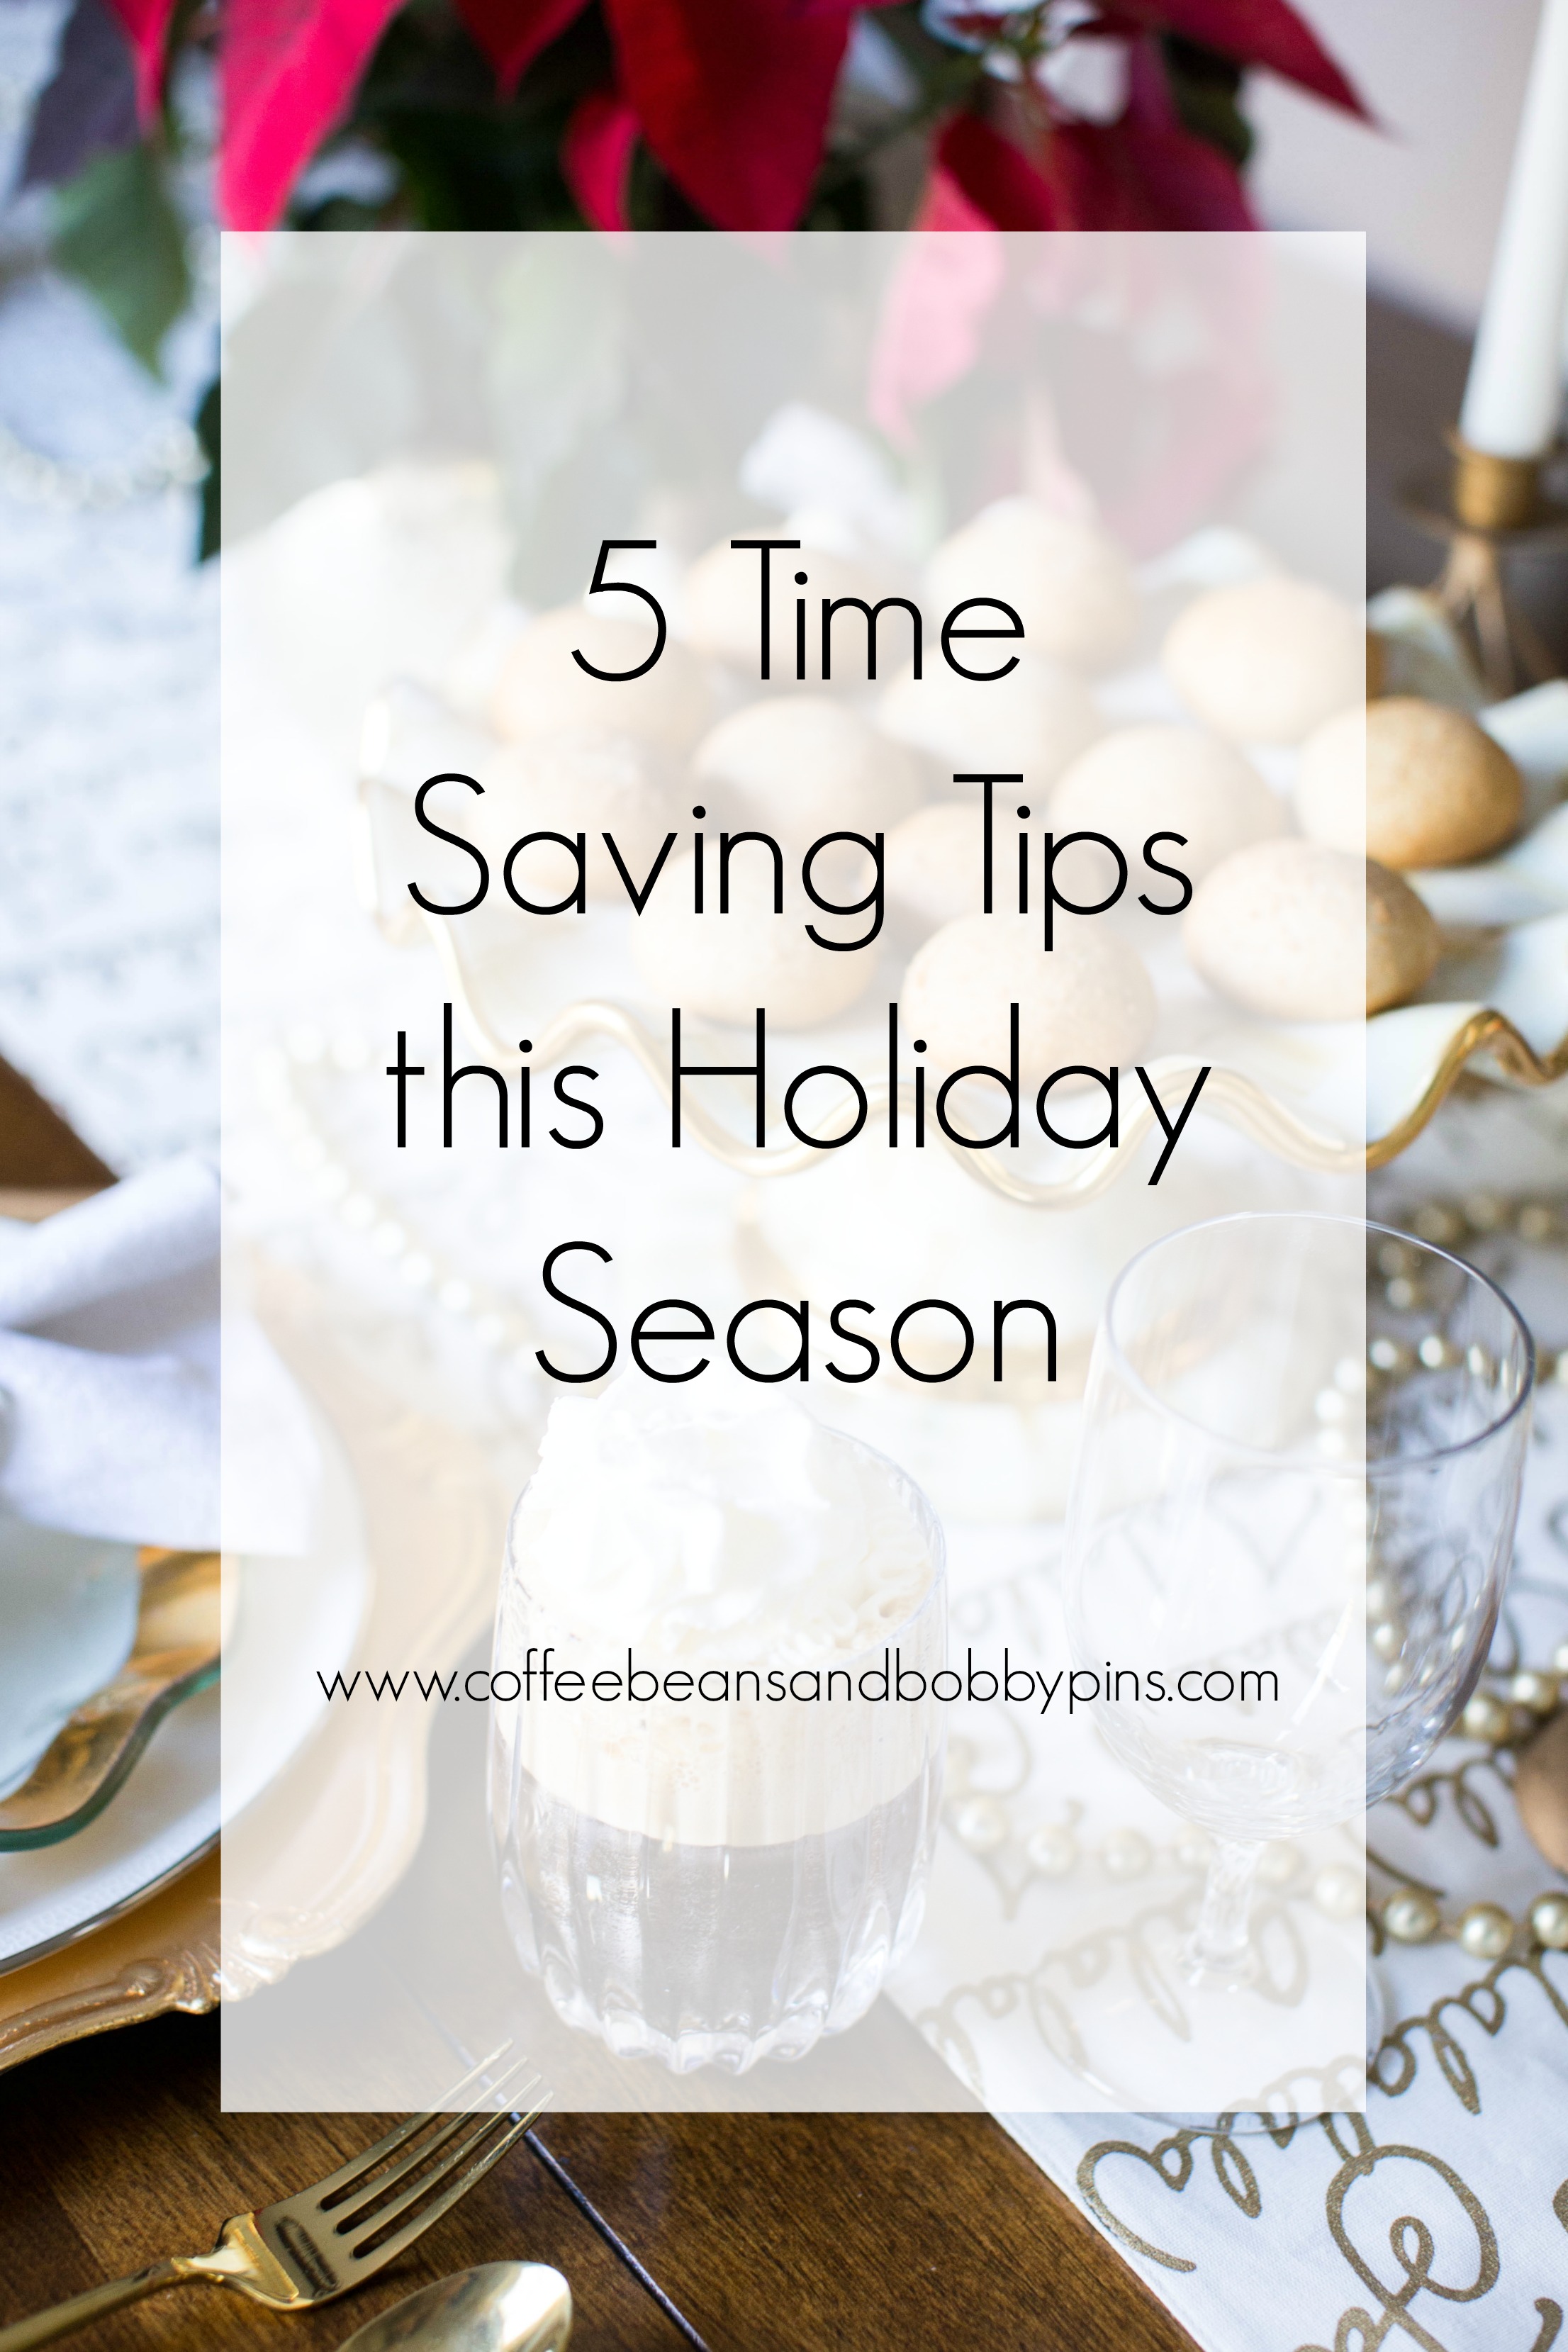 5 Time Saving Tips this Holiday Season by North Carolina style blogger Coffee Beans and Bobby Pins